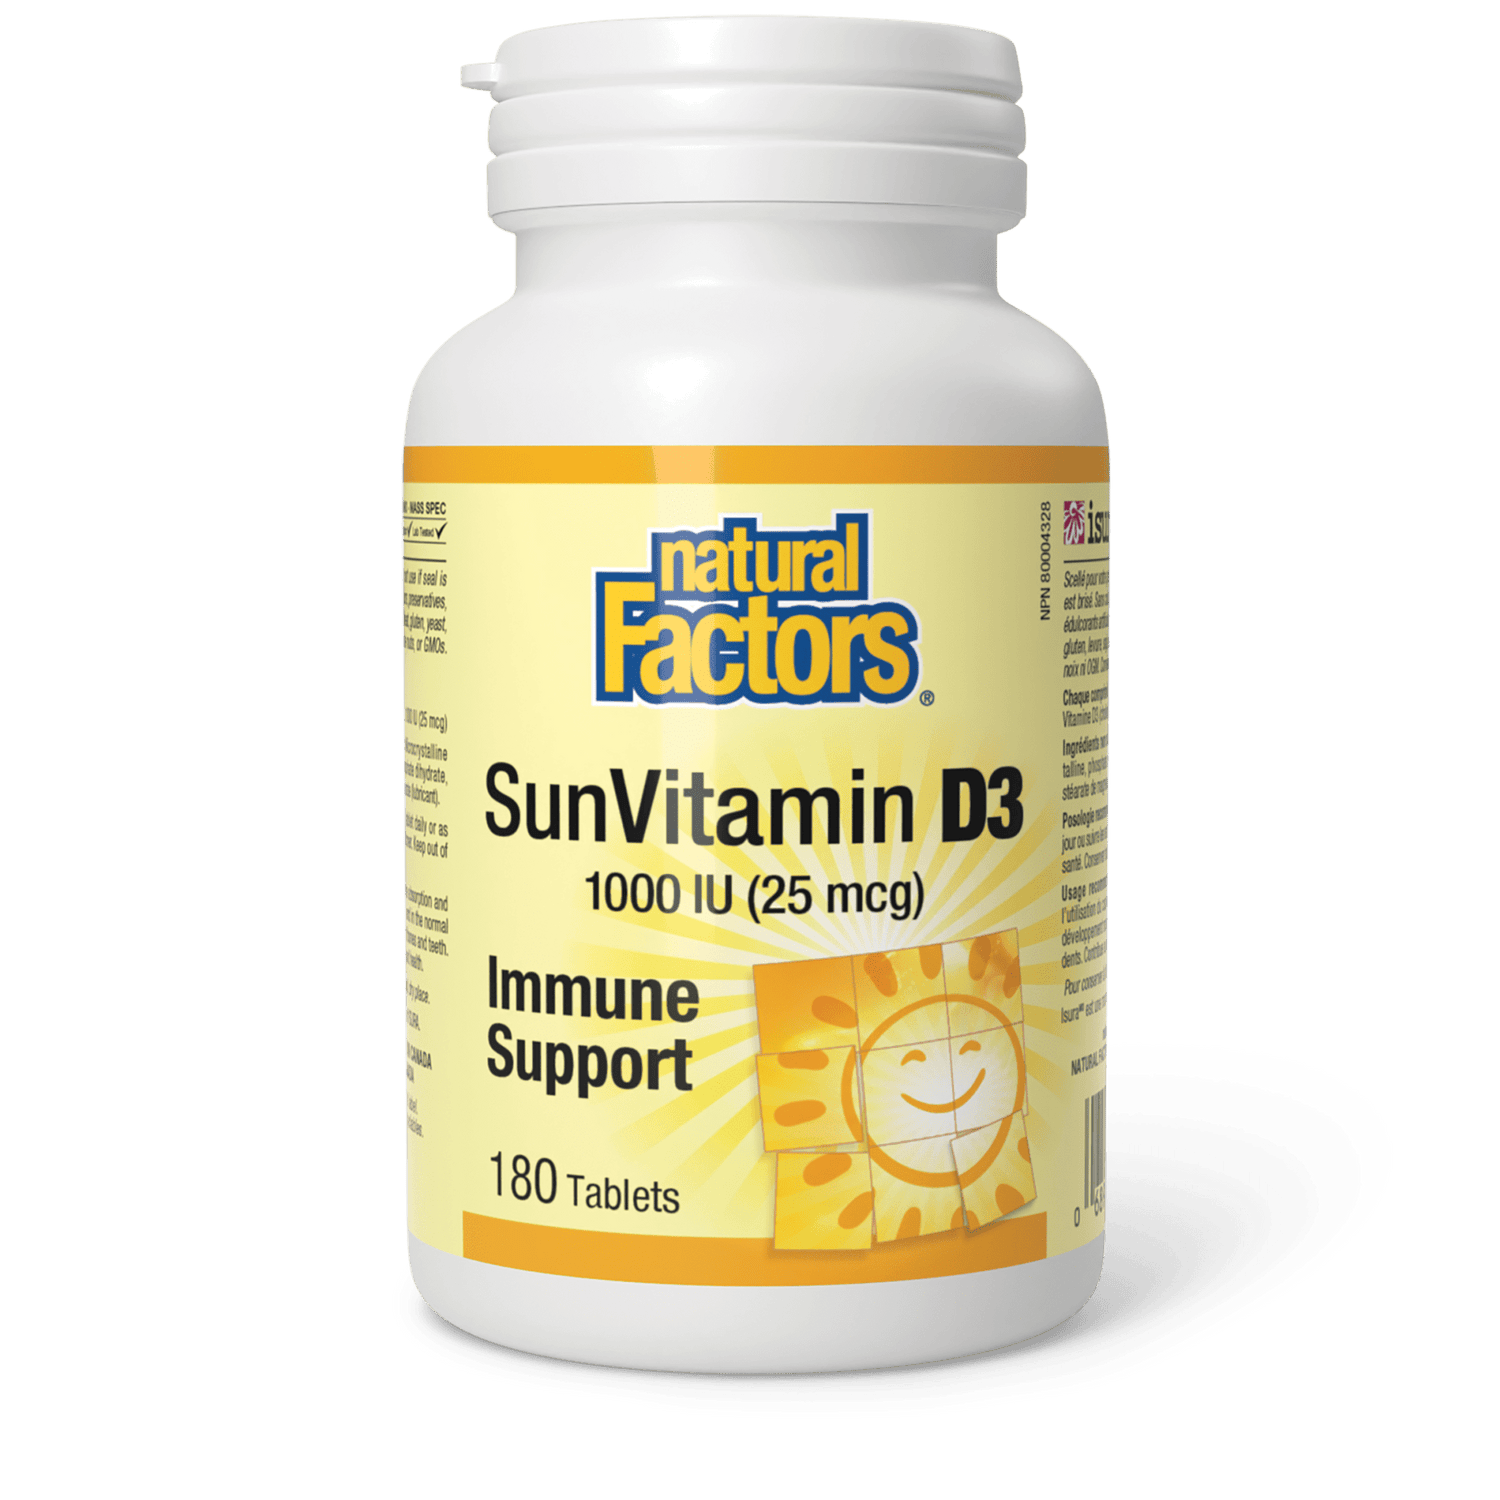 SunVitamin D3 Tablets 1000 IU, Natural Factors|v|image|1051